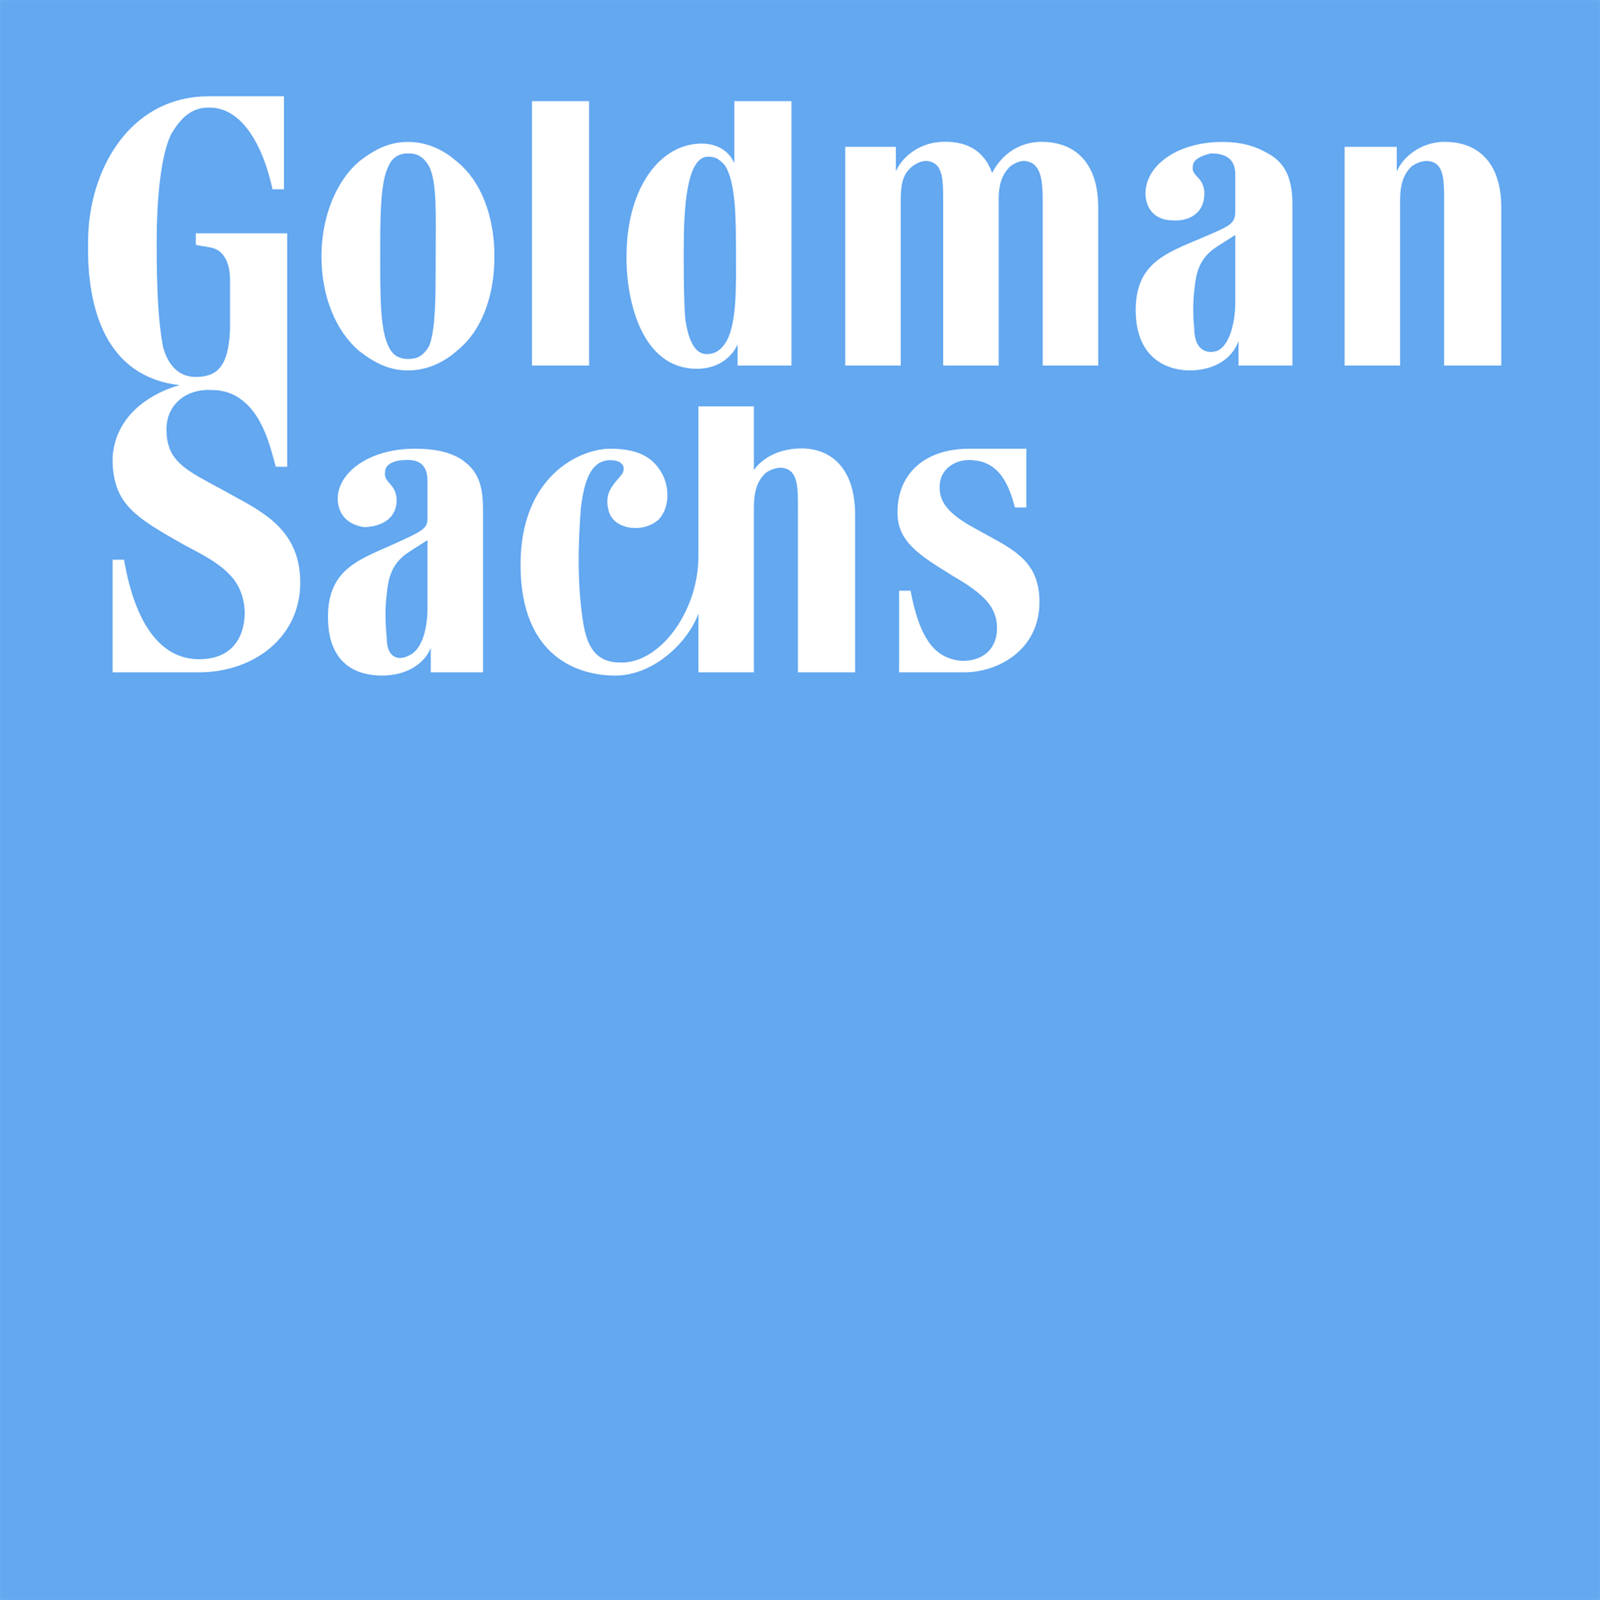 White with Blue Square Logo - Goldman Sachs Logo, Goldman Sachs Symbol Meaning, History and Evolution